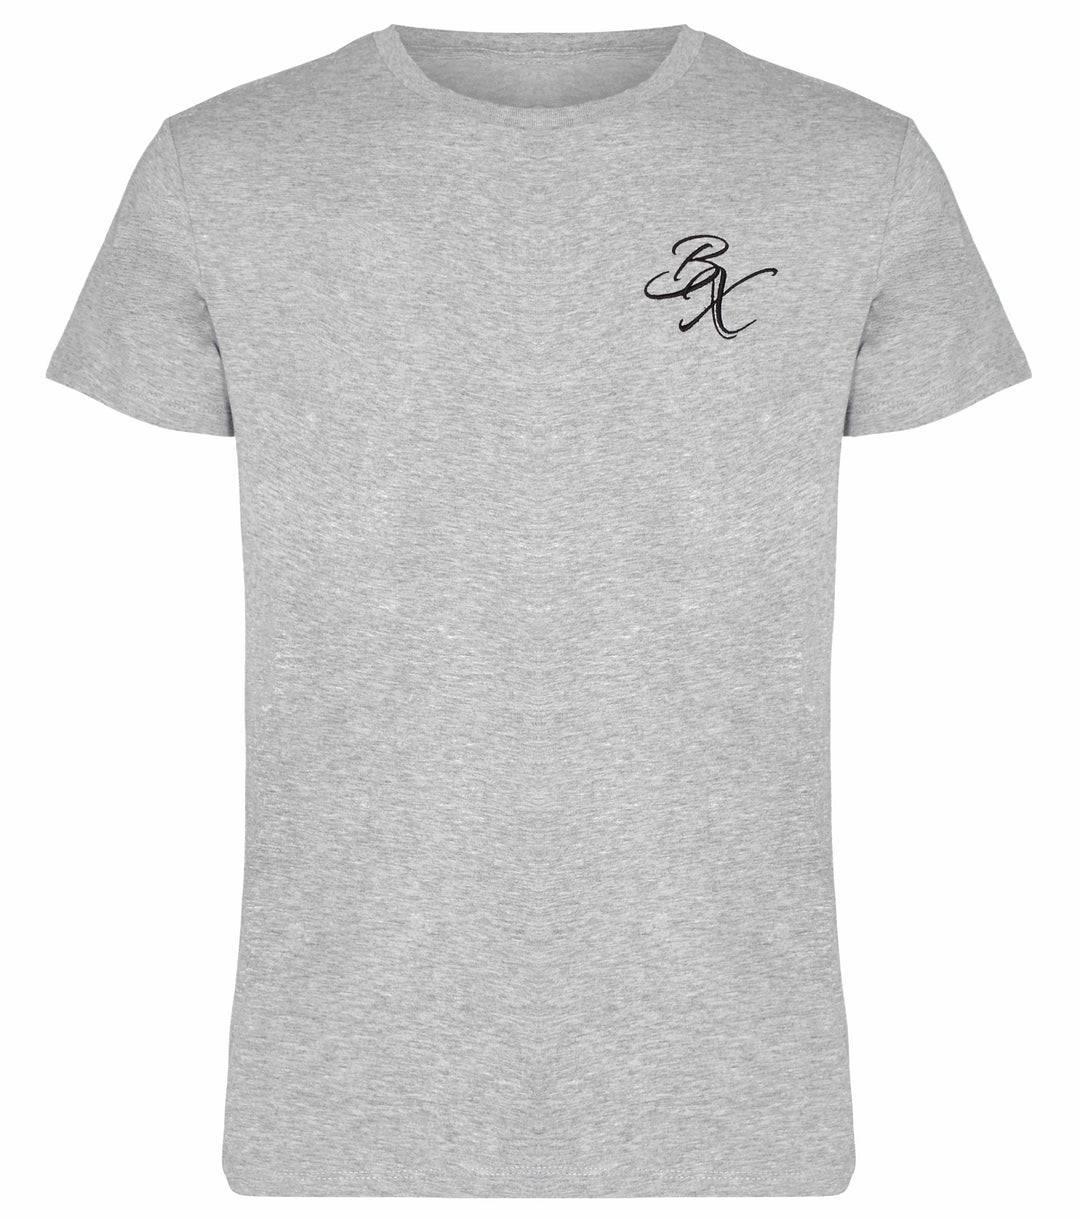 BX Original Slim Fit T-shirt - Heather Grey - Adapt Avenue